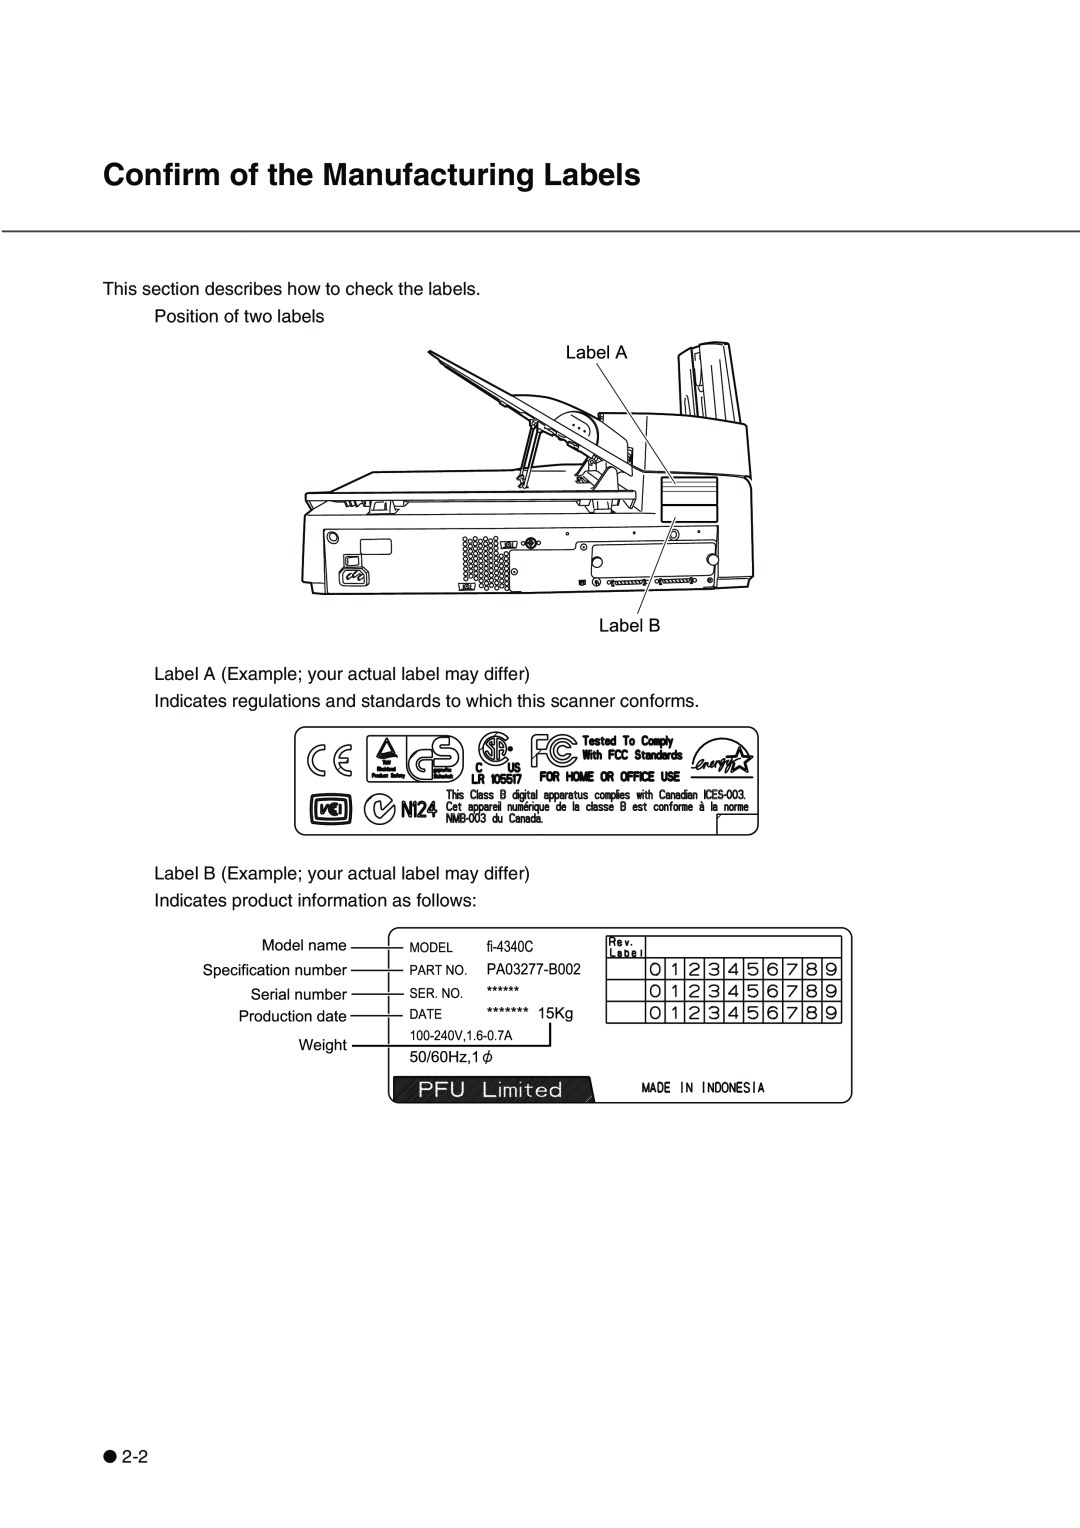 Fujitsu fi-4340C manual LabelB, Confirm of the Manufacturing Labels 